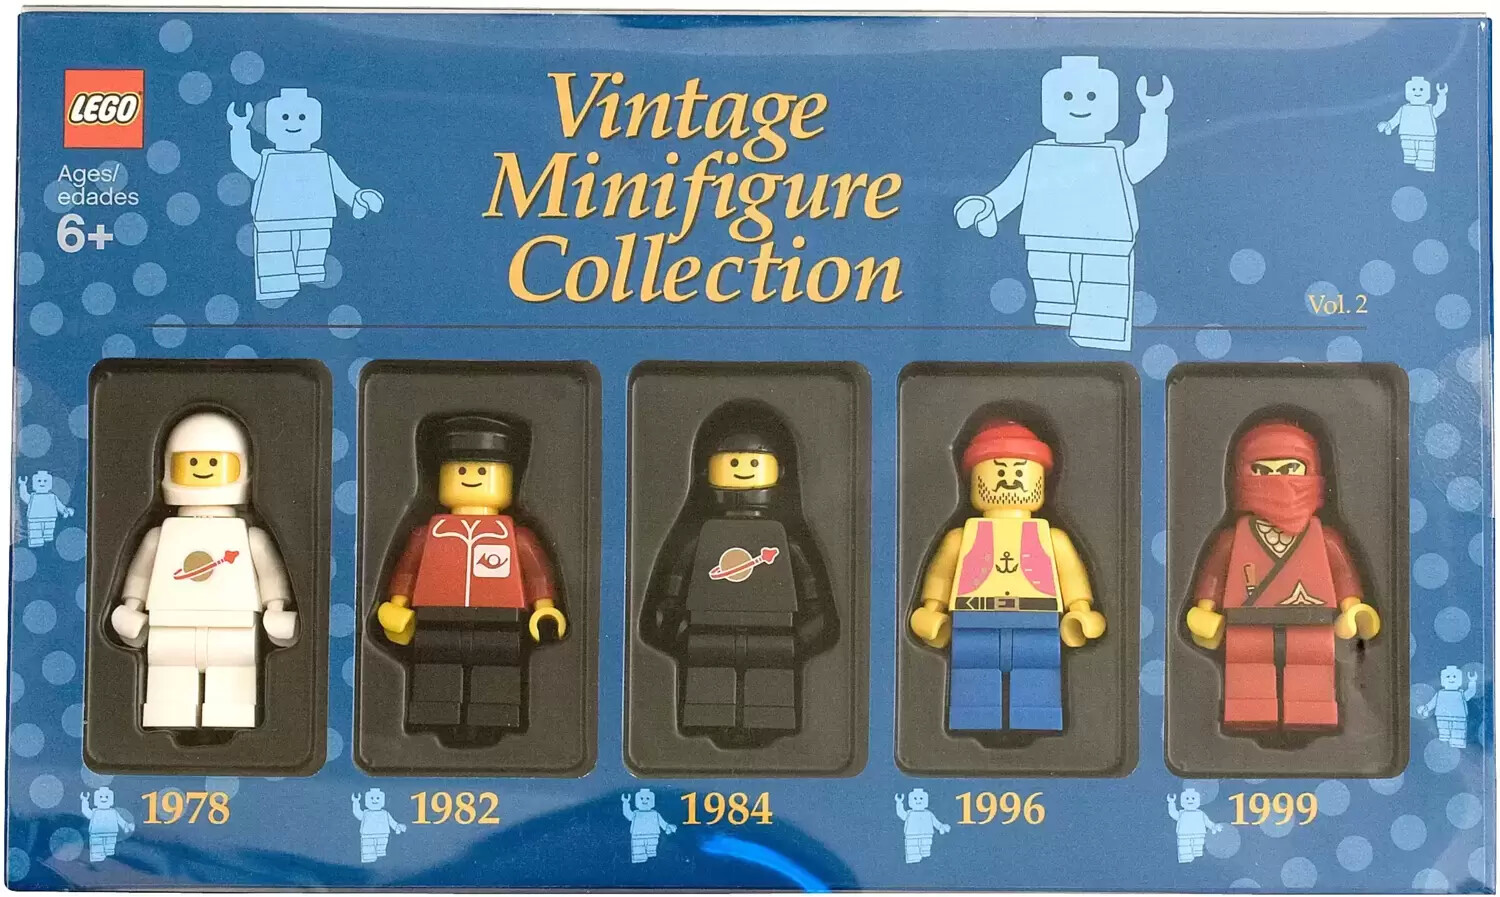 Vintage Minifigure Collection Vol. 2 - LEGO Minifigure Collection